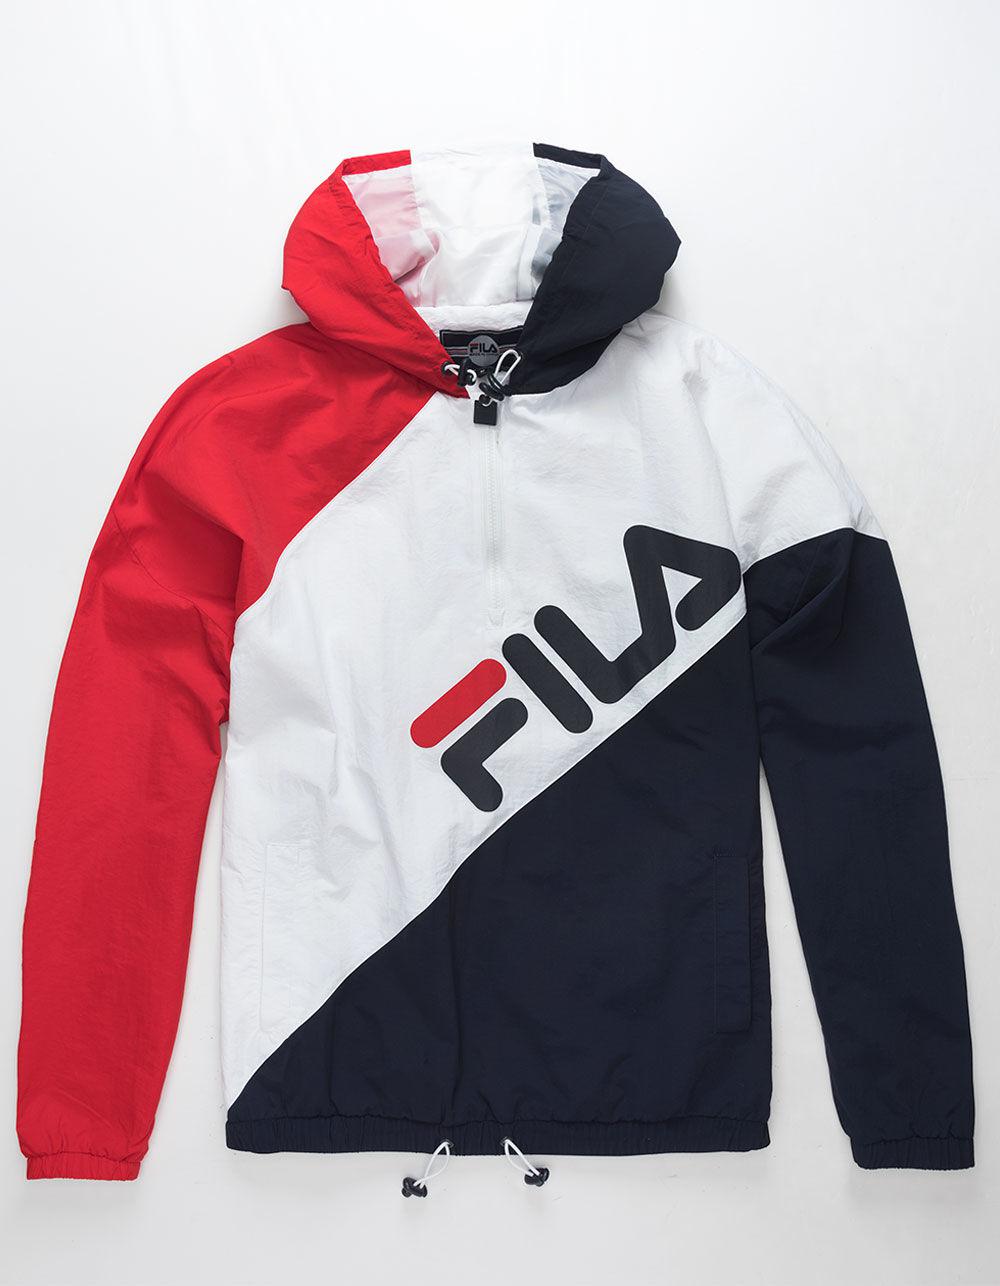 fila jacket red white blue